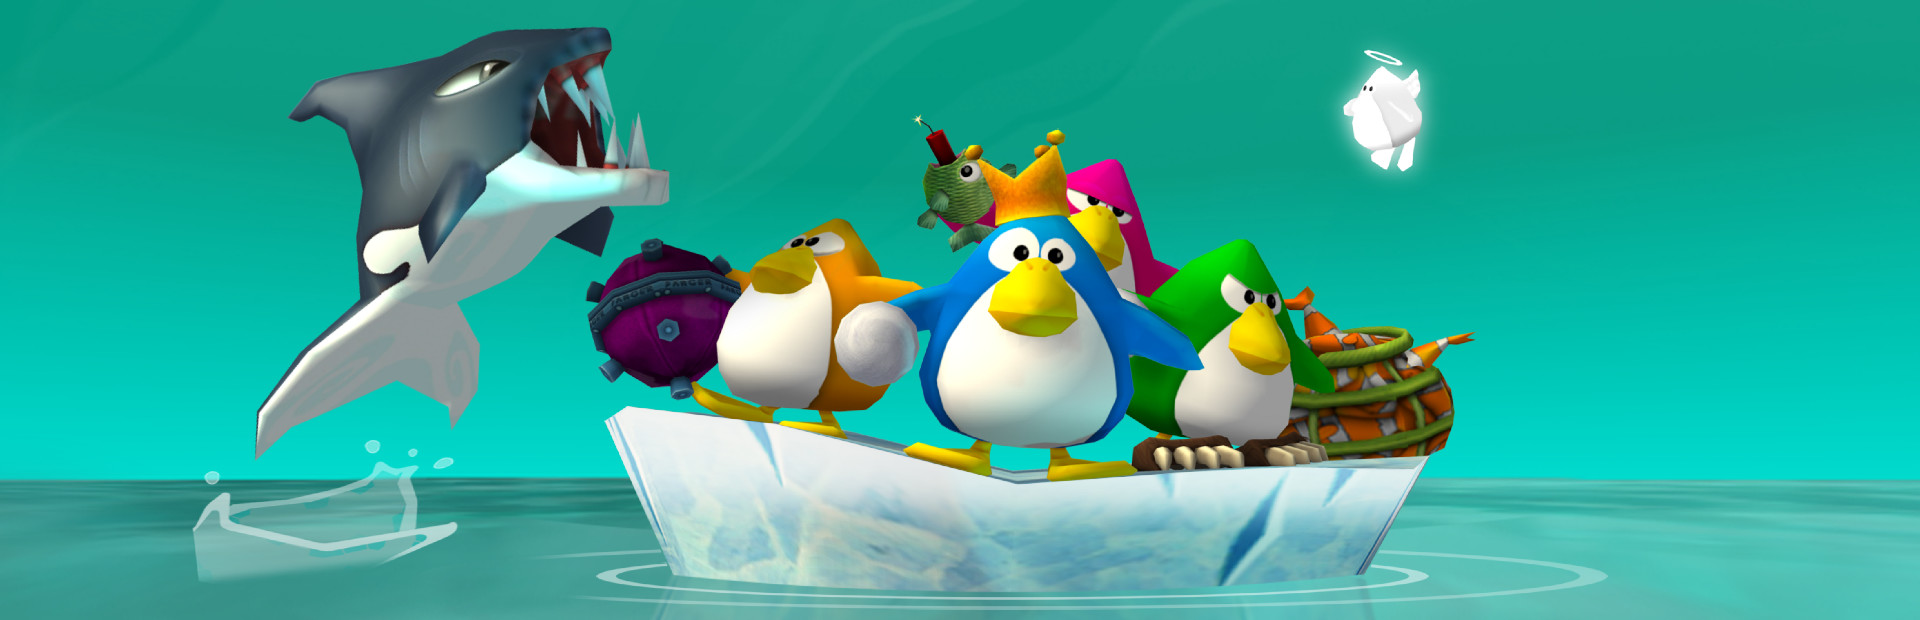 Penguins Arena: Sedna's World cover image